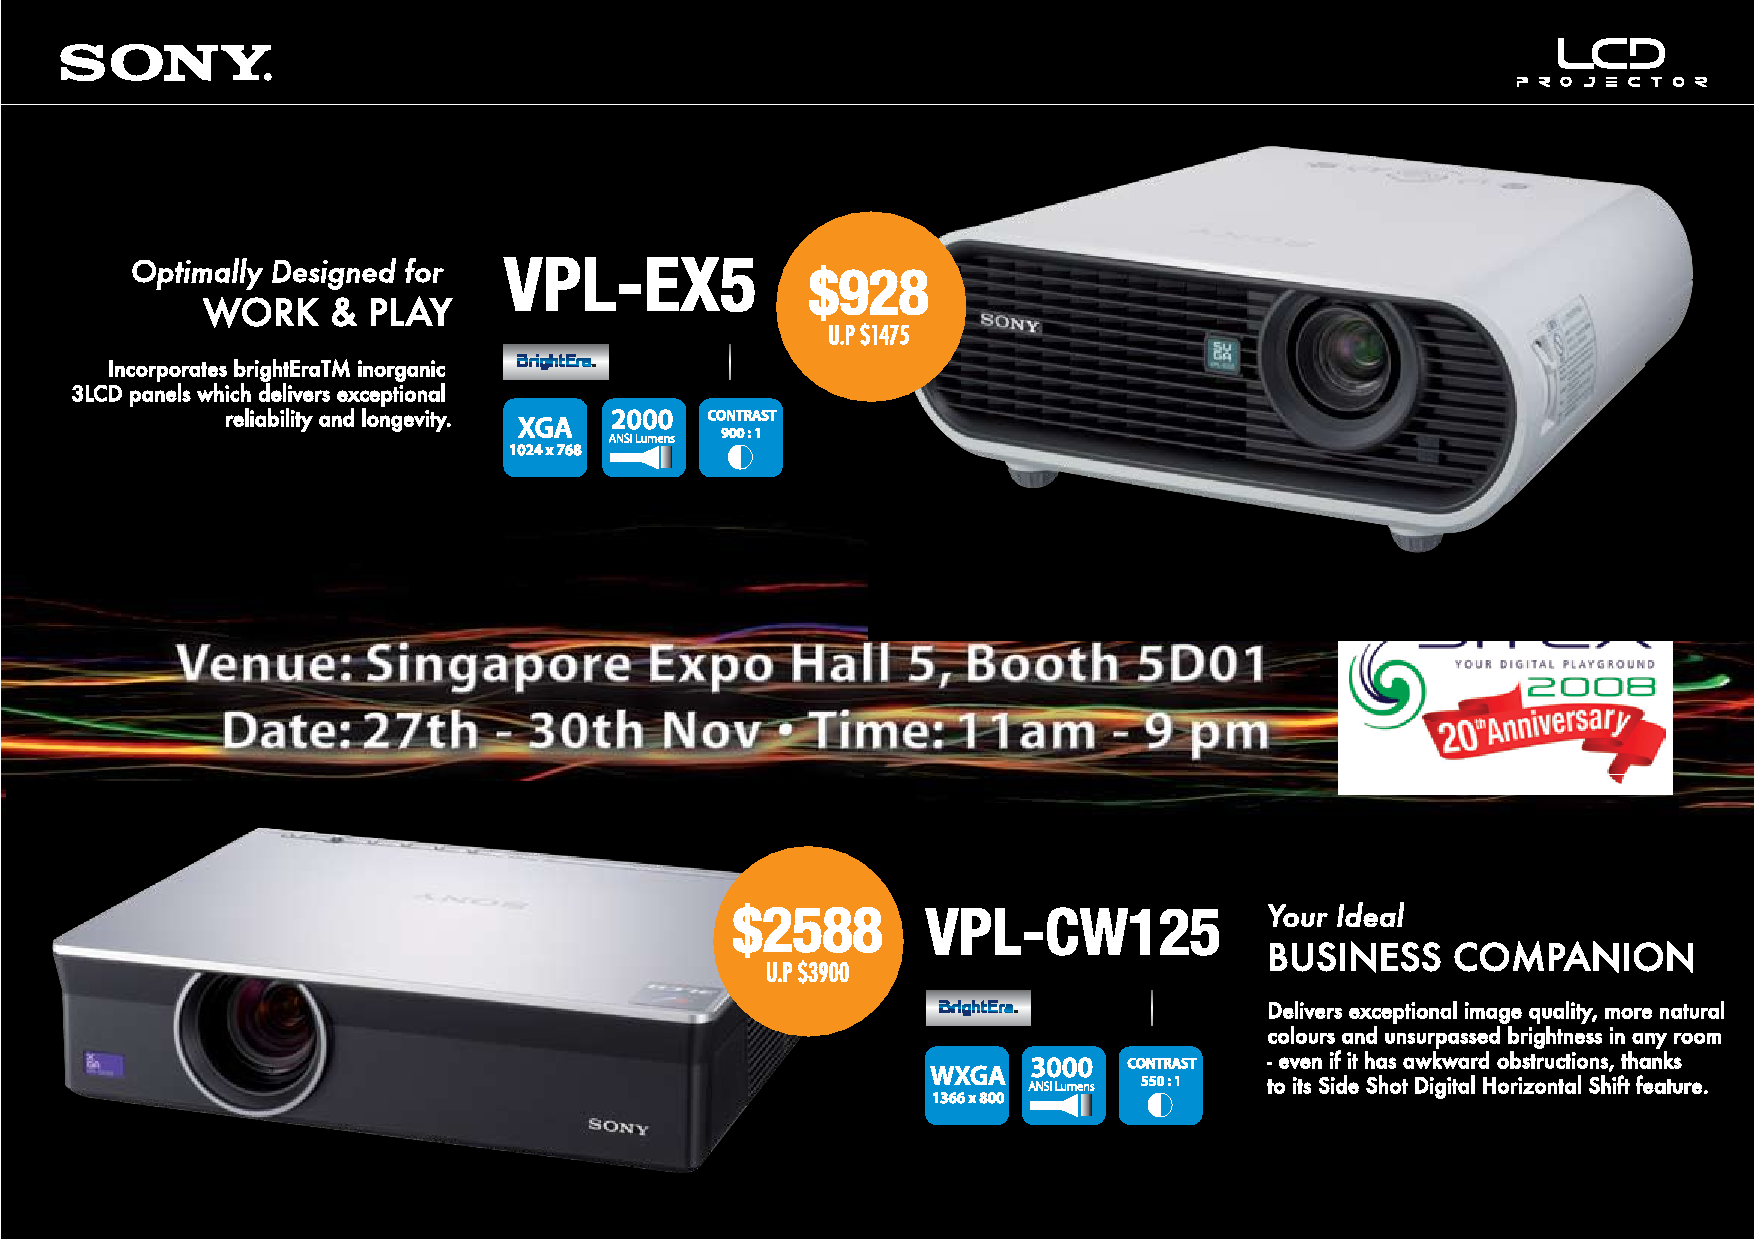 Sitex 2008 price list image brochure of Sony Projectors Bpp2